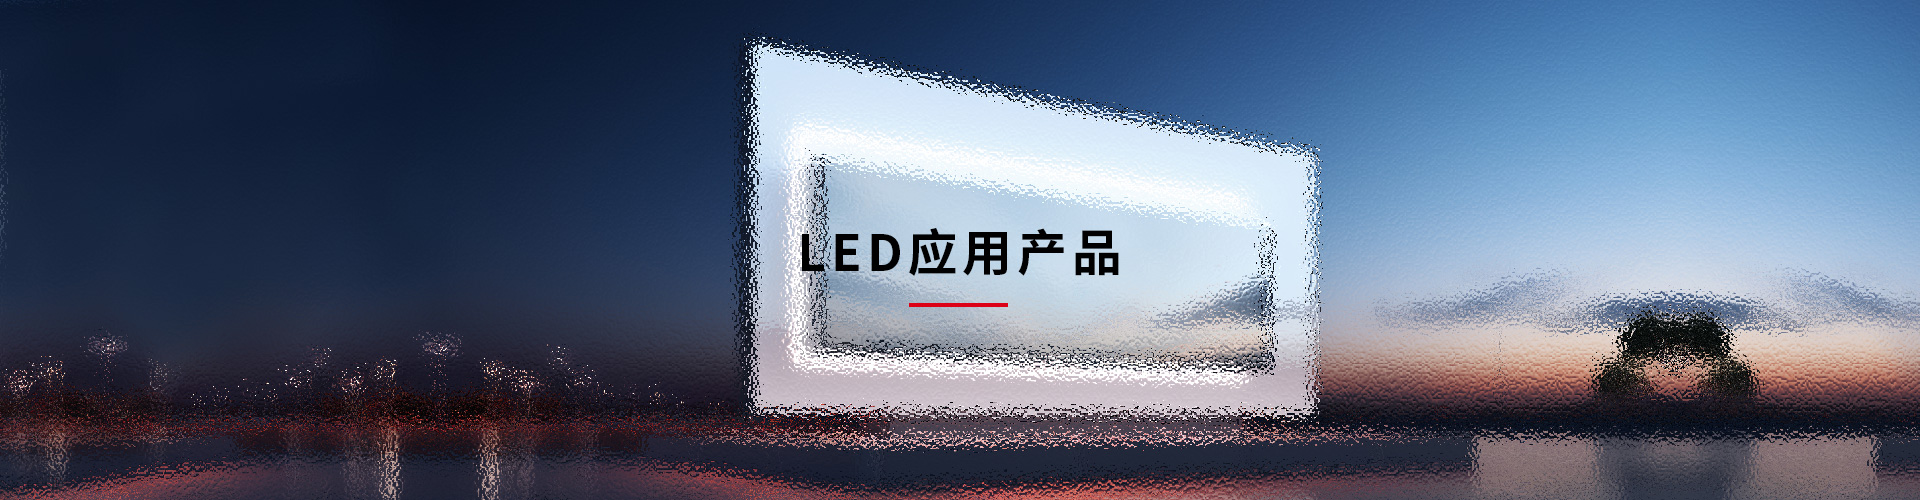 LED应用产品